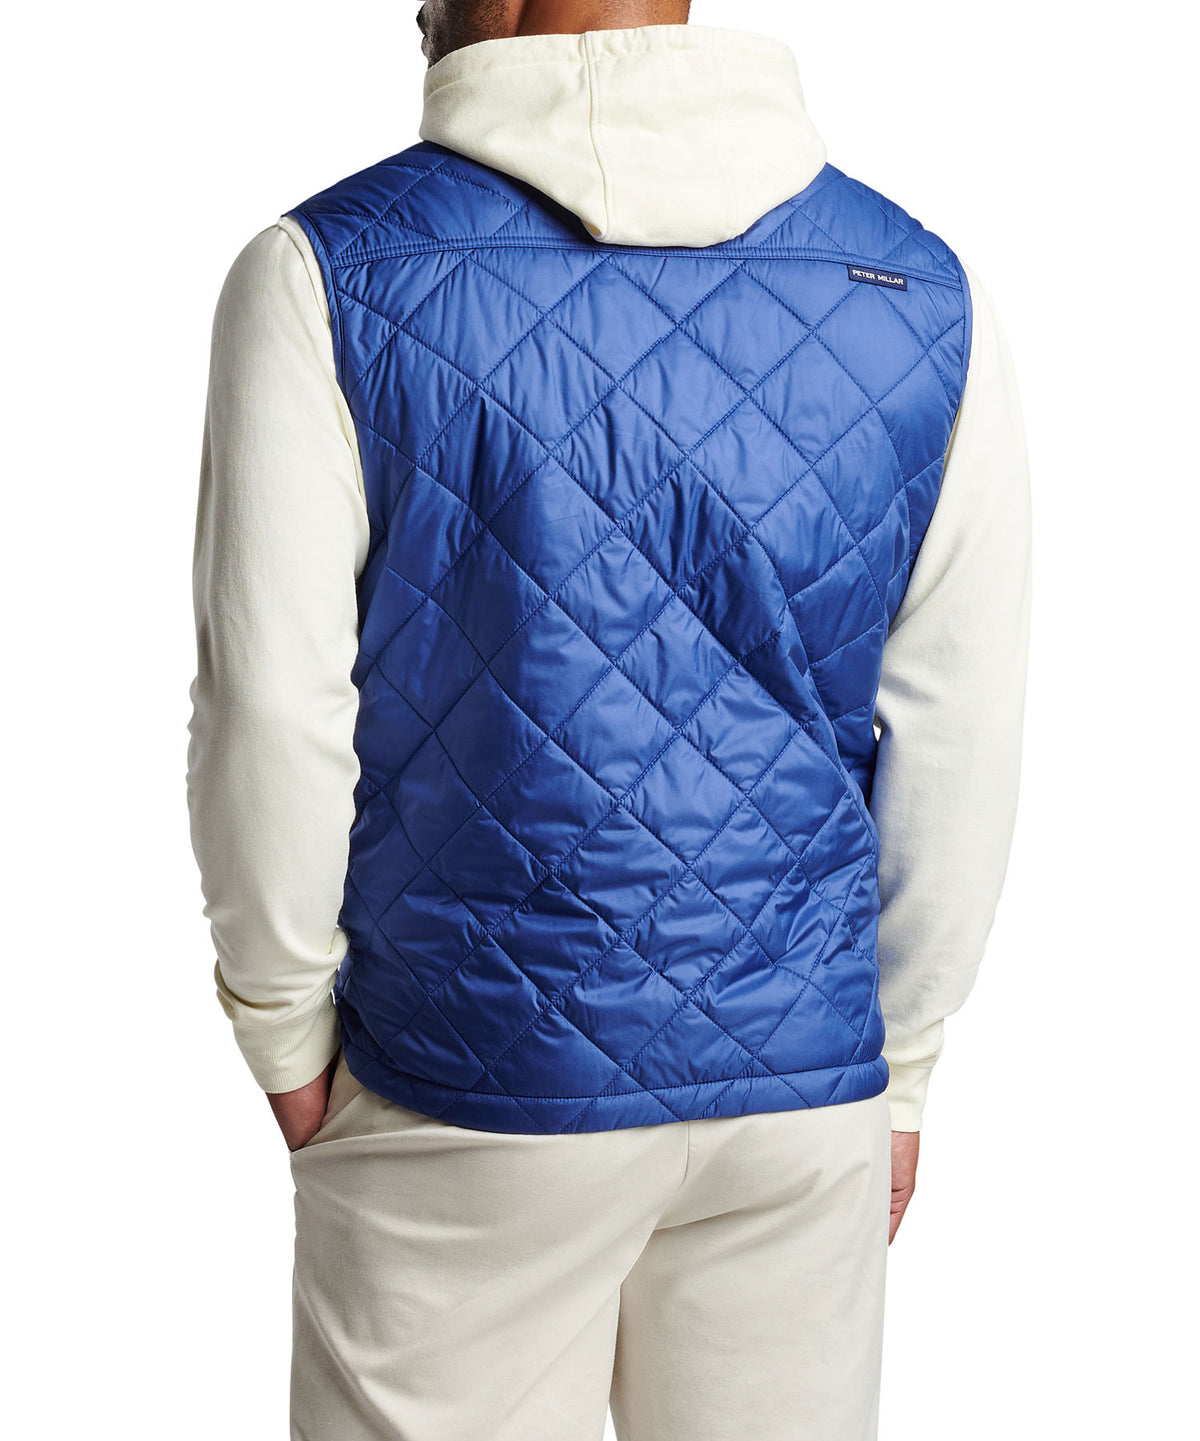 Peter Millar Bedford Outerwear Vest